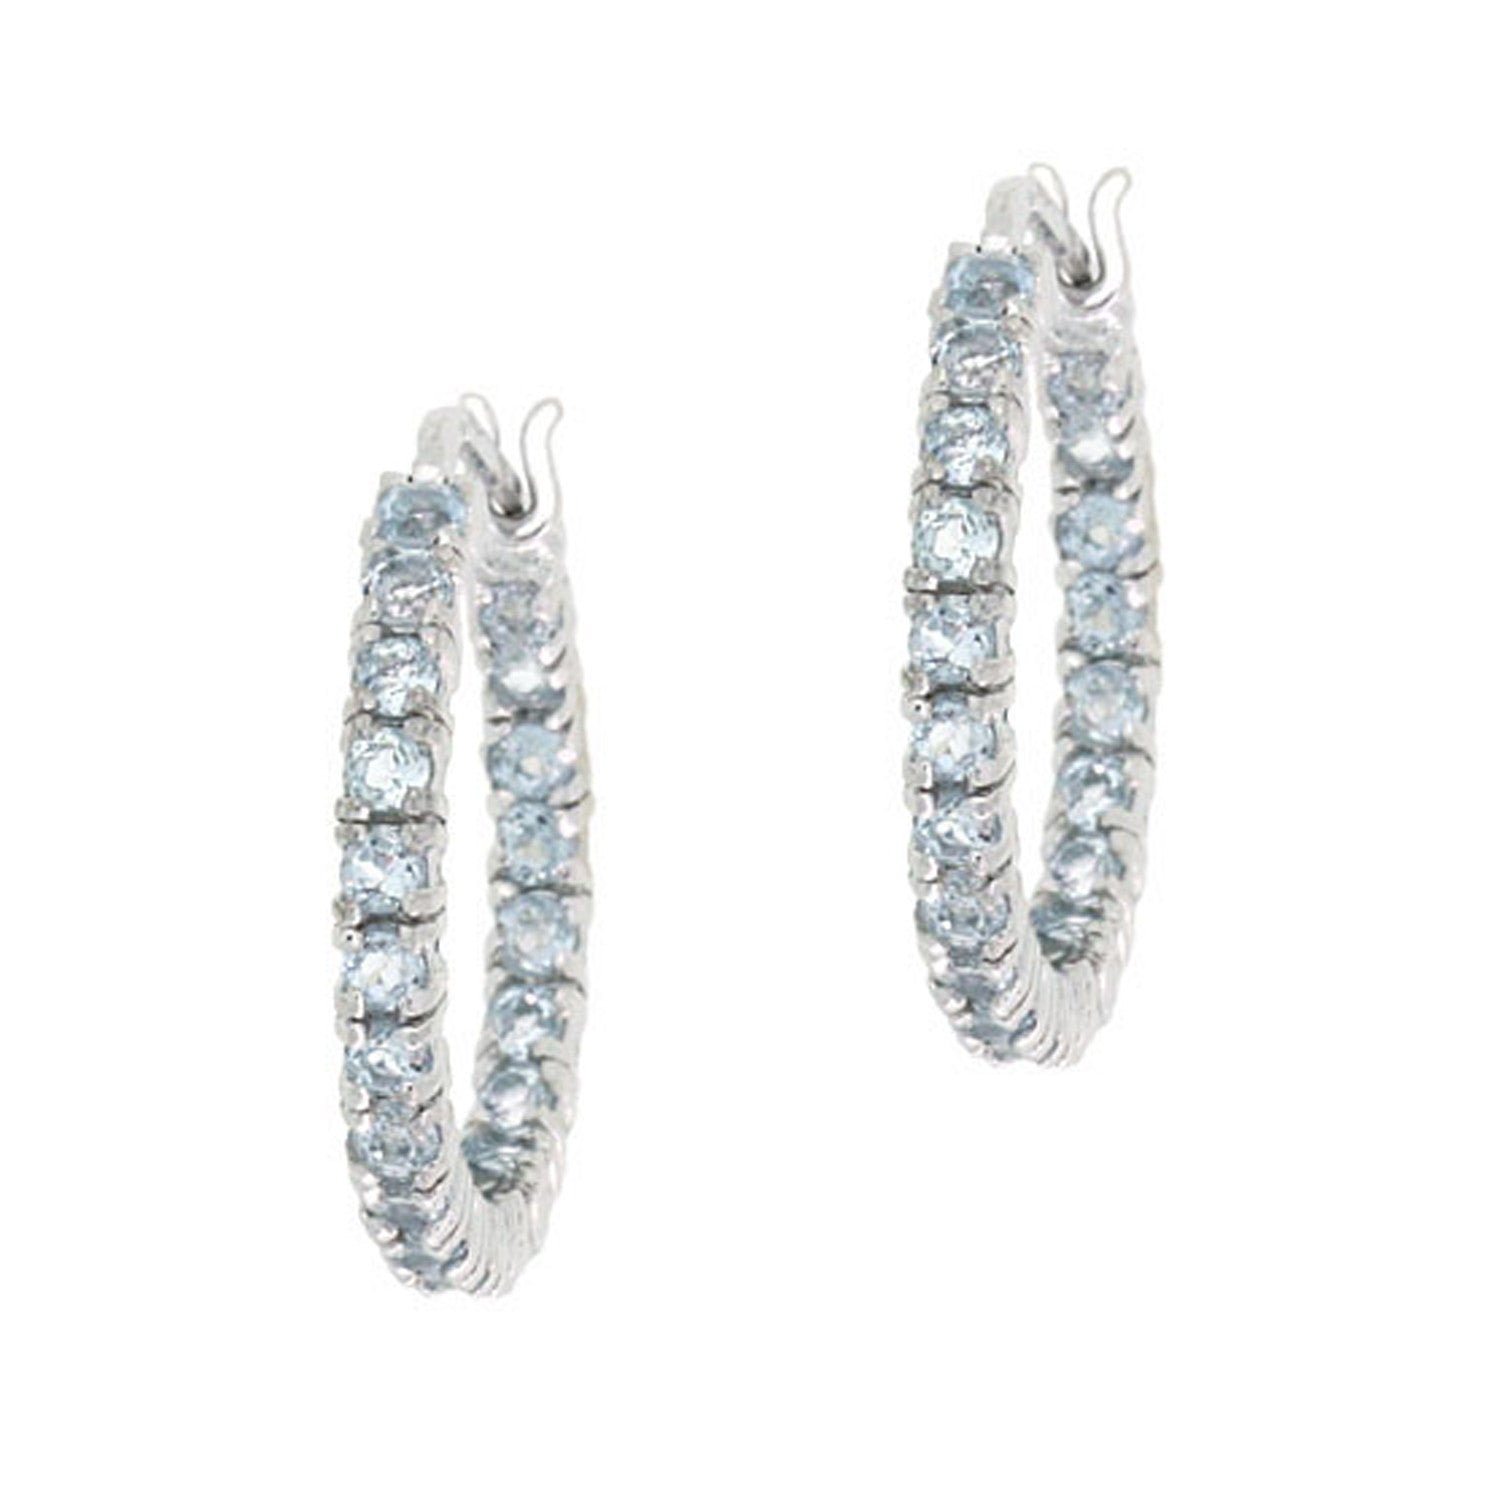 Sterling Silver Gemstone Accent Inside Out Saddleback Hoop Earrings - Blue Topaz